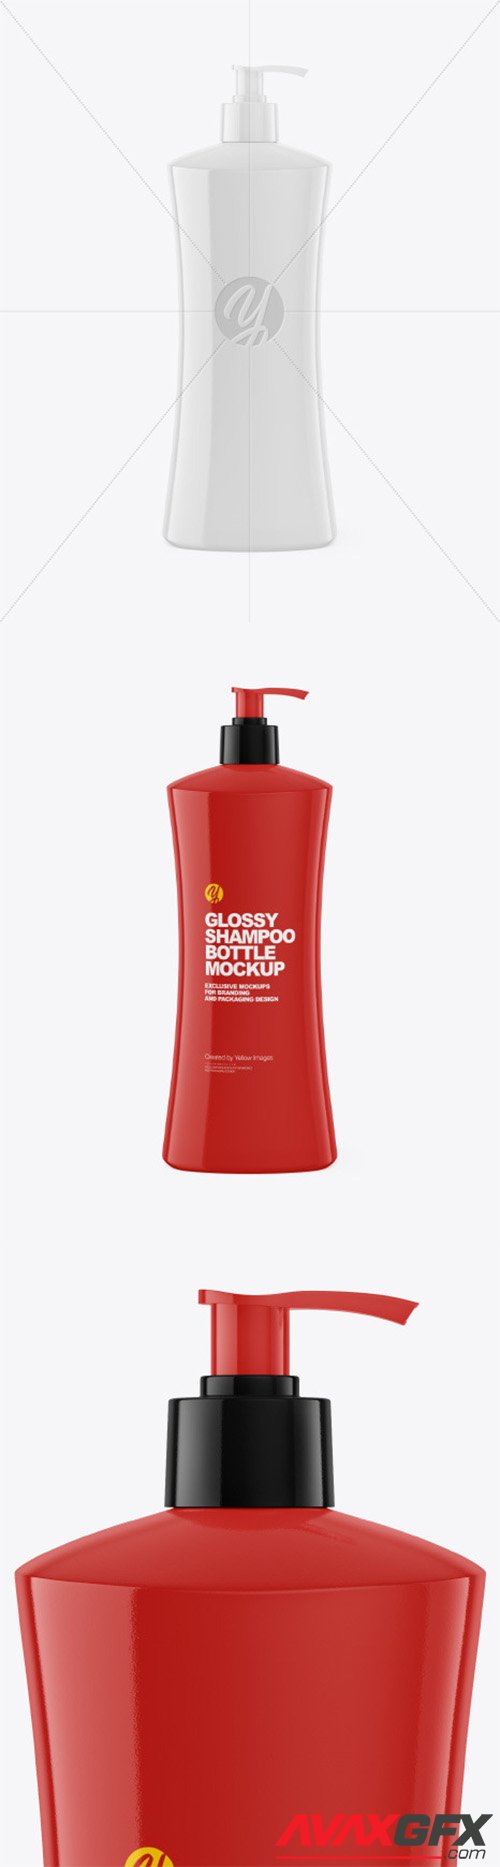 Glossy Shampoo Bottle Mockup 82046